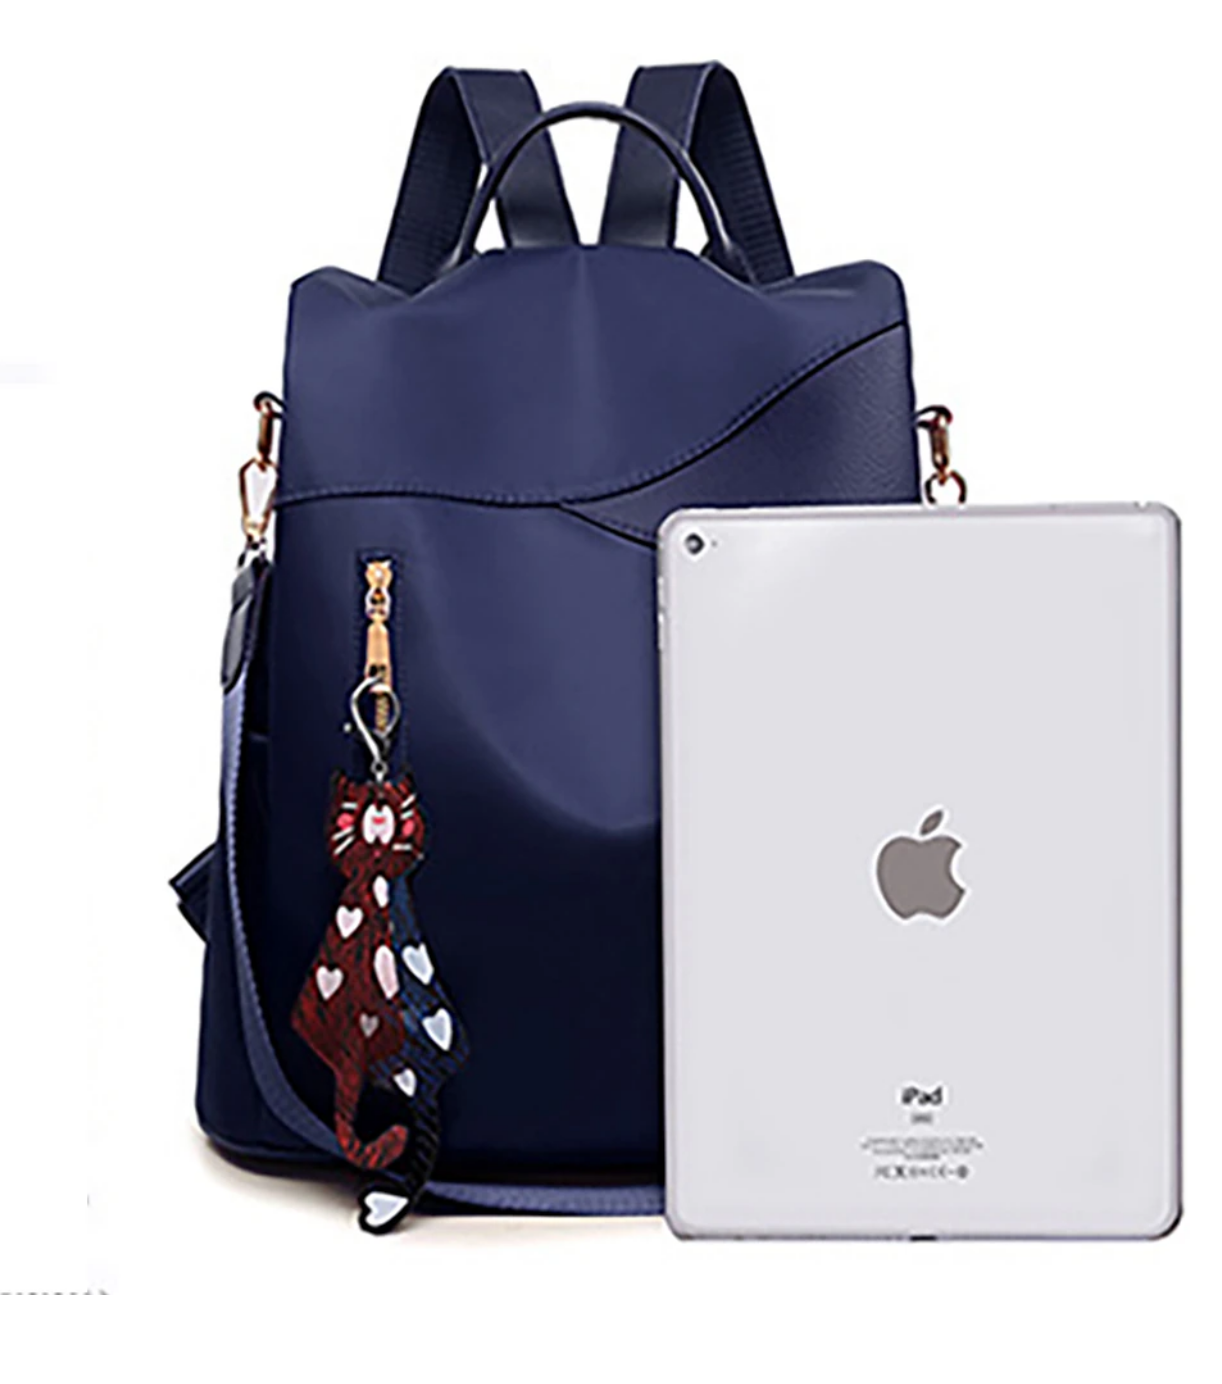 Women's Backpack School Bag Bookbag Commuter Backpack Outdoor Daily Solid Color Oxford Adjustable Waterproof Pendant Black Red Blue